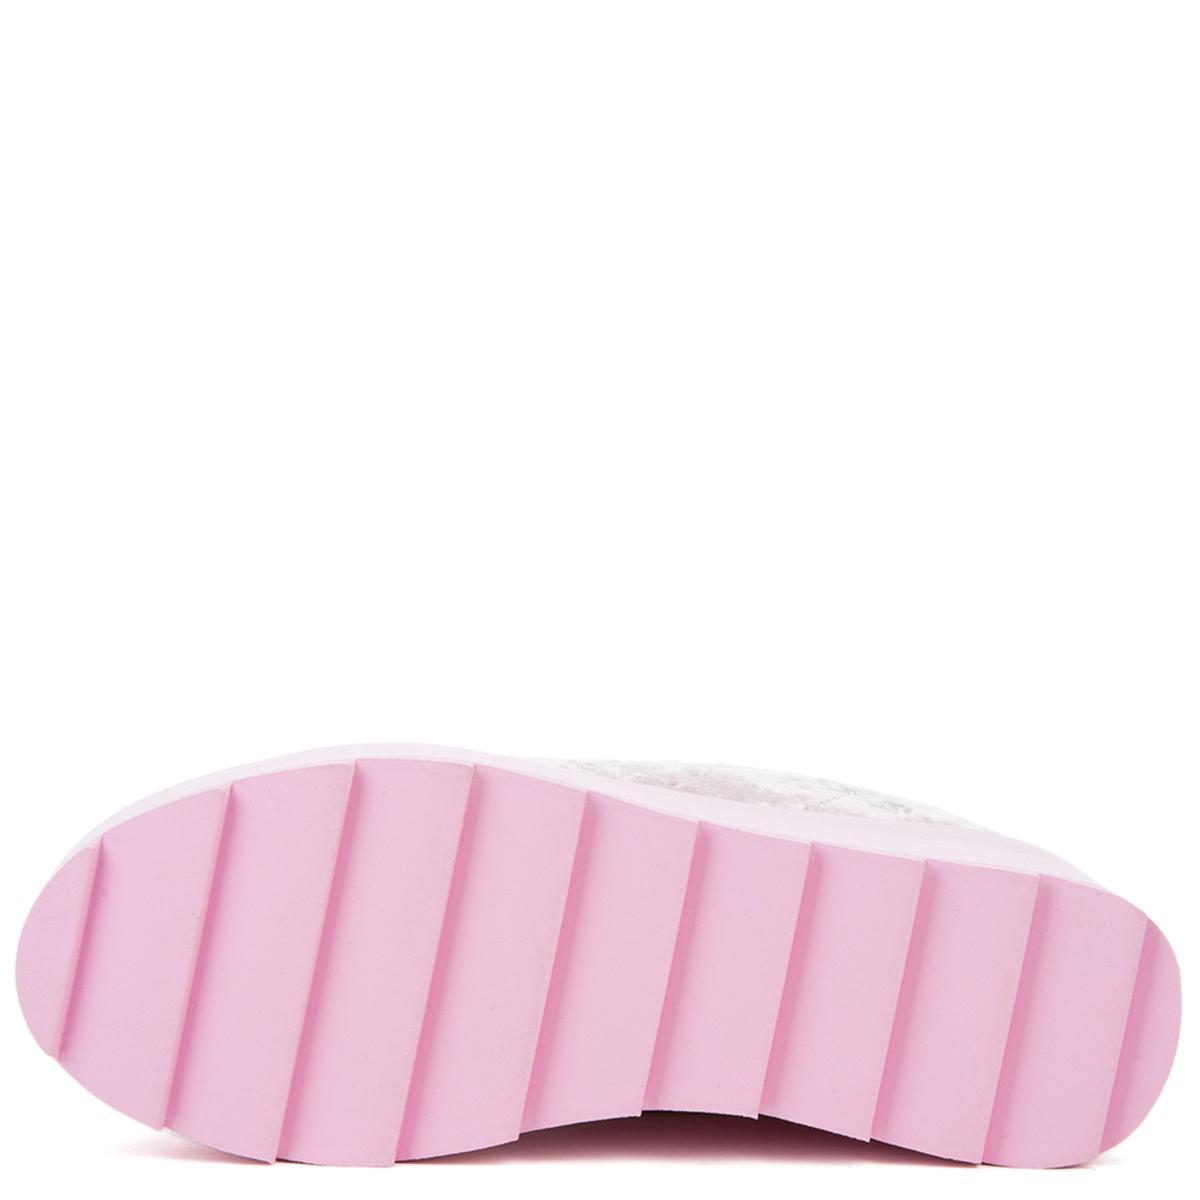 YRU LaLa Velcro Pink Velvet Platform Sneakers PINK